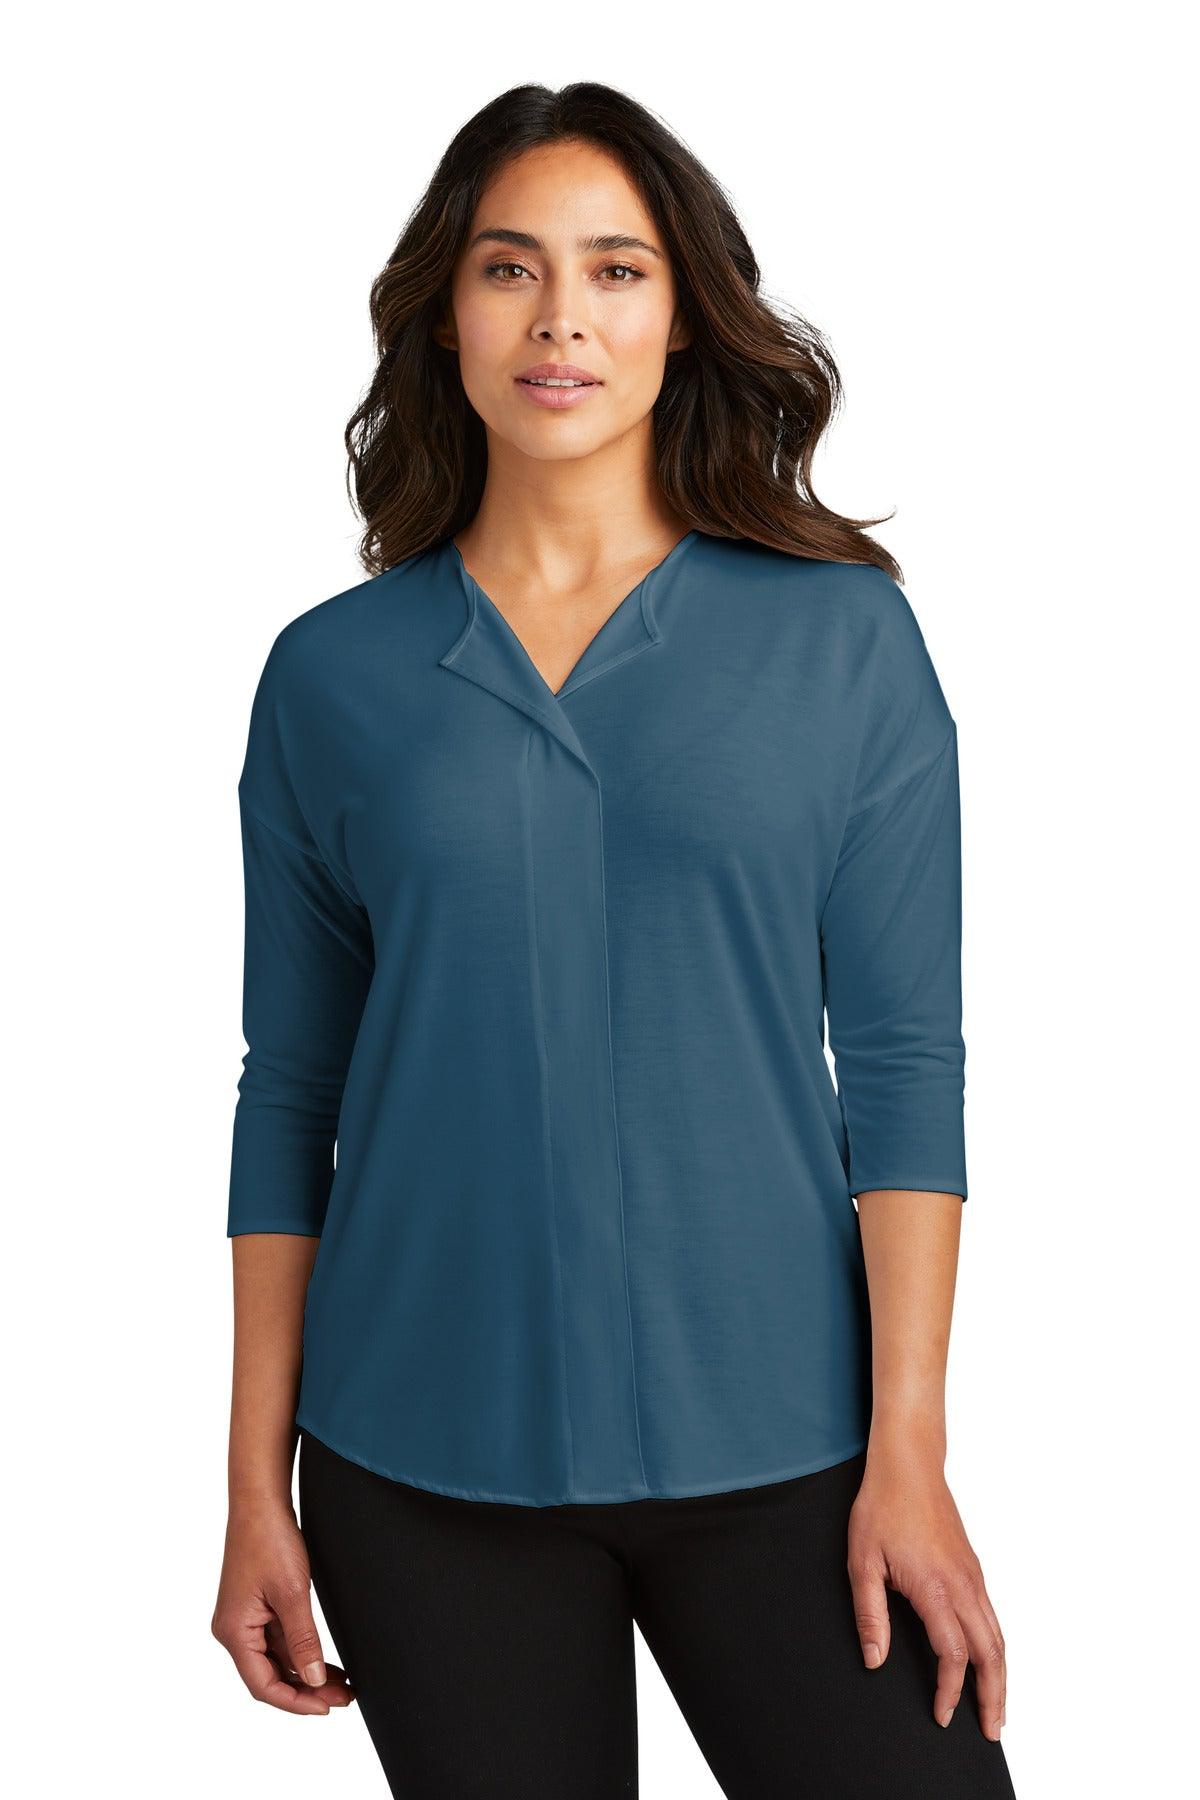 Port Authority Ladies Concept 3/4-Sleeve Soft Split Neck Top. LK5433 - Dresses Max